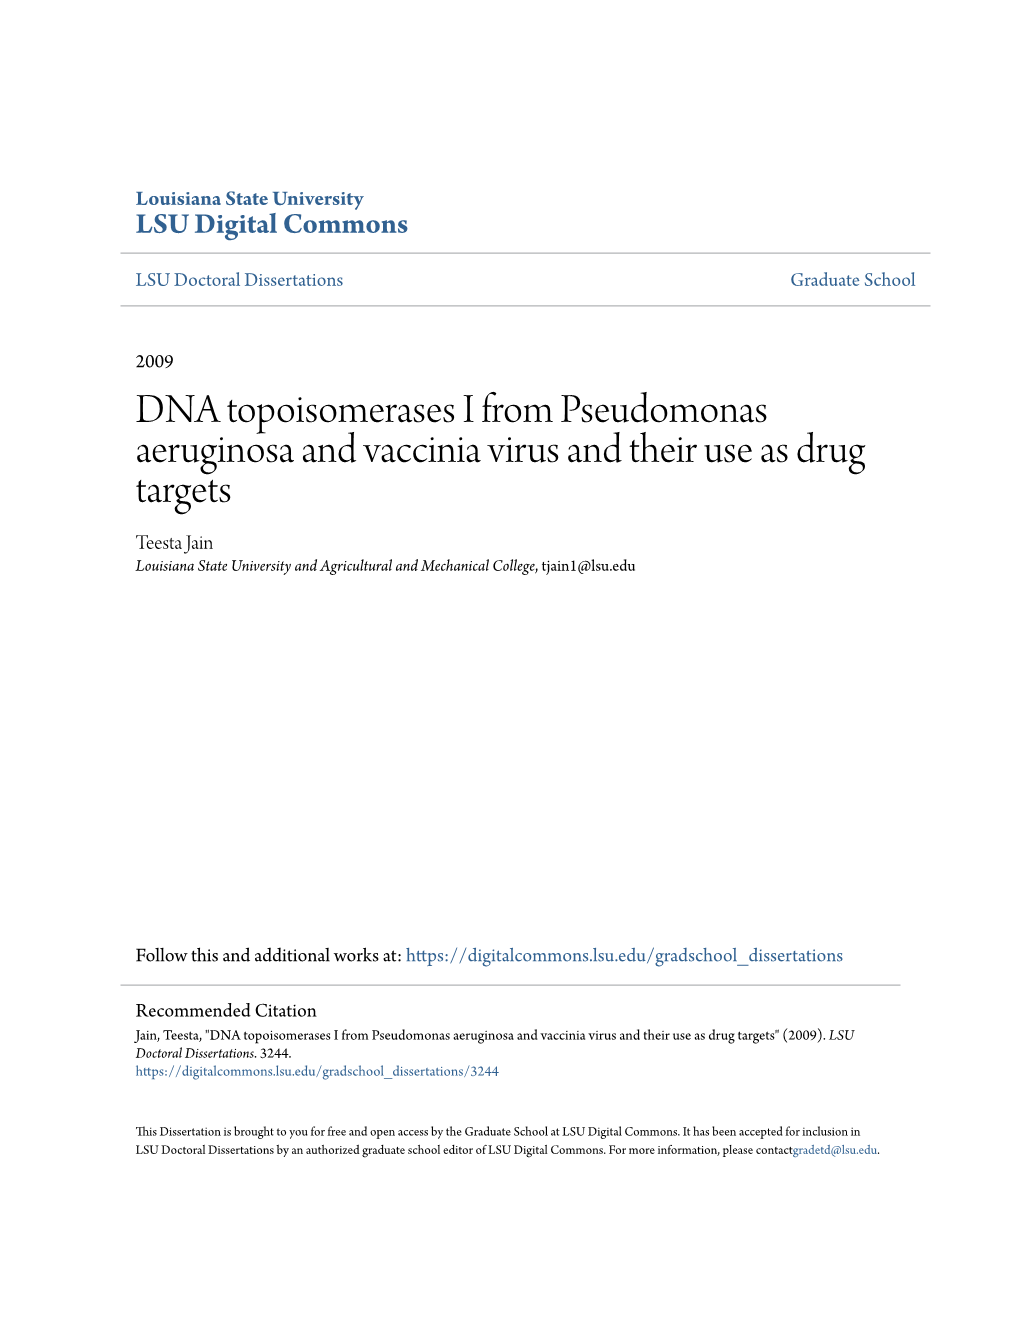 DNA Topoisomerases I from Pseudomonas Aeruginosa And